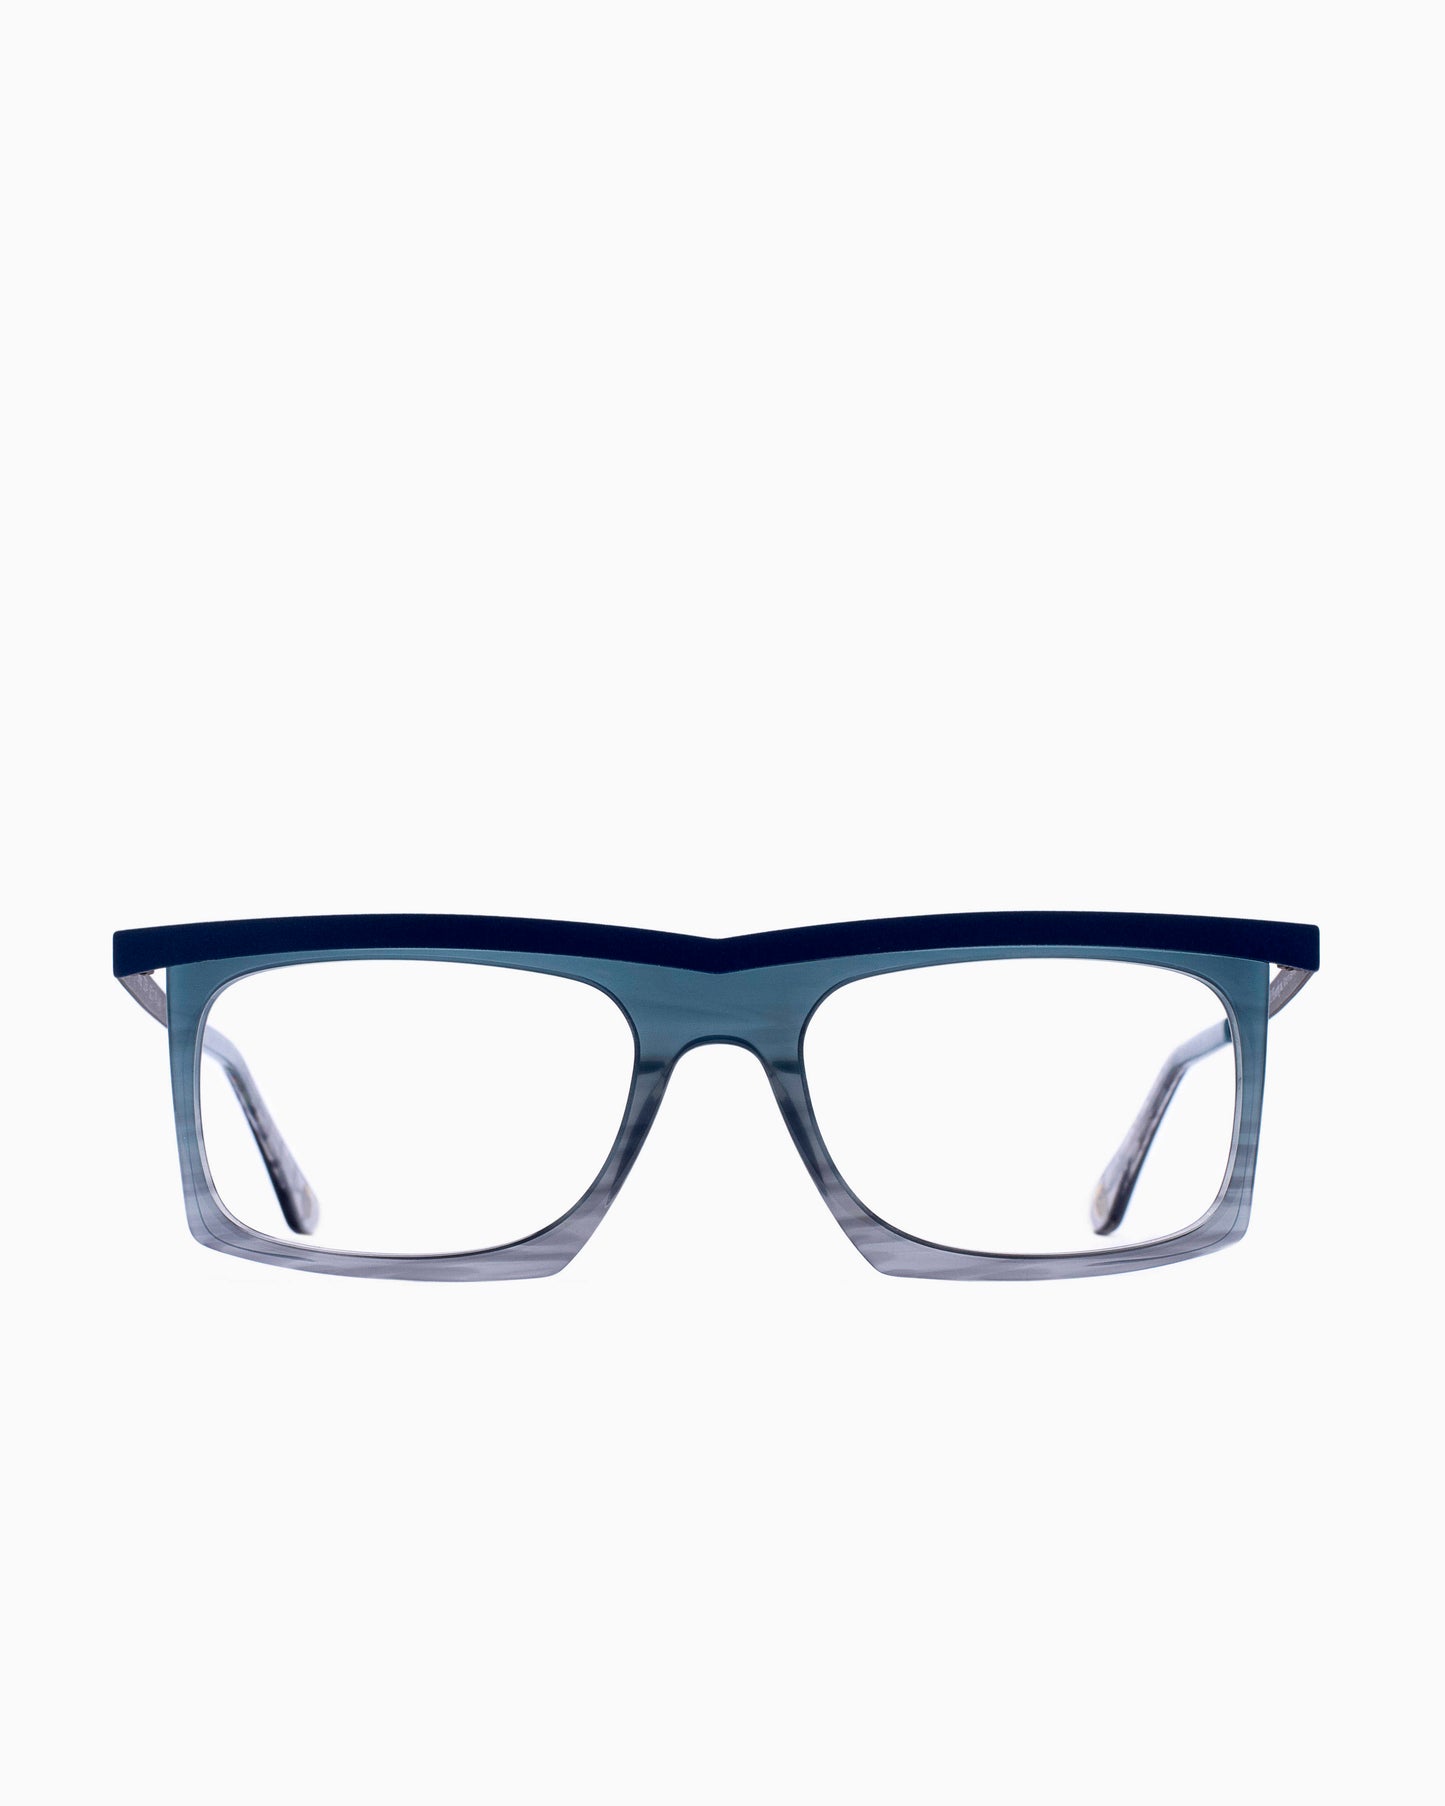 Spectacleeyeworks - Doug - C874 | glasses bar